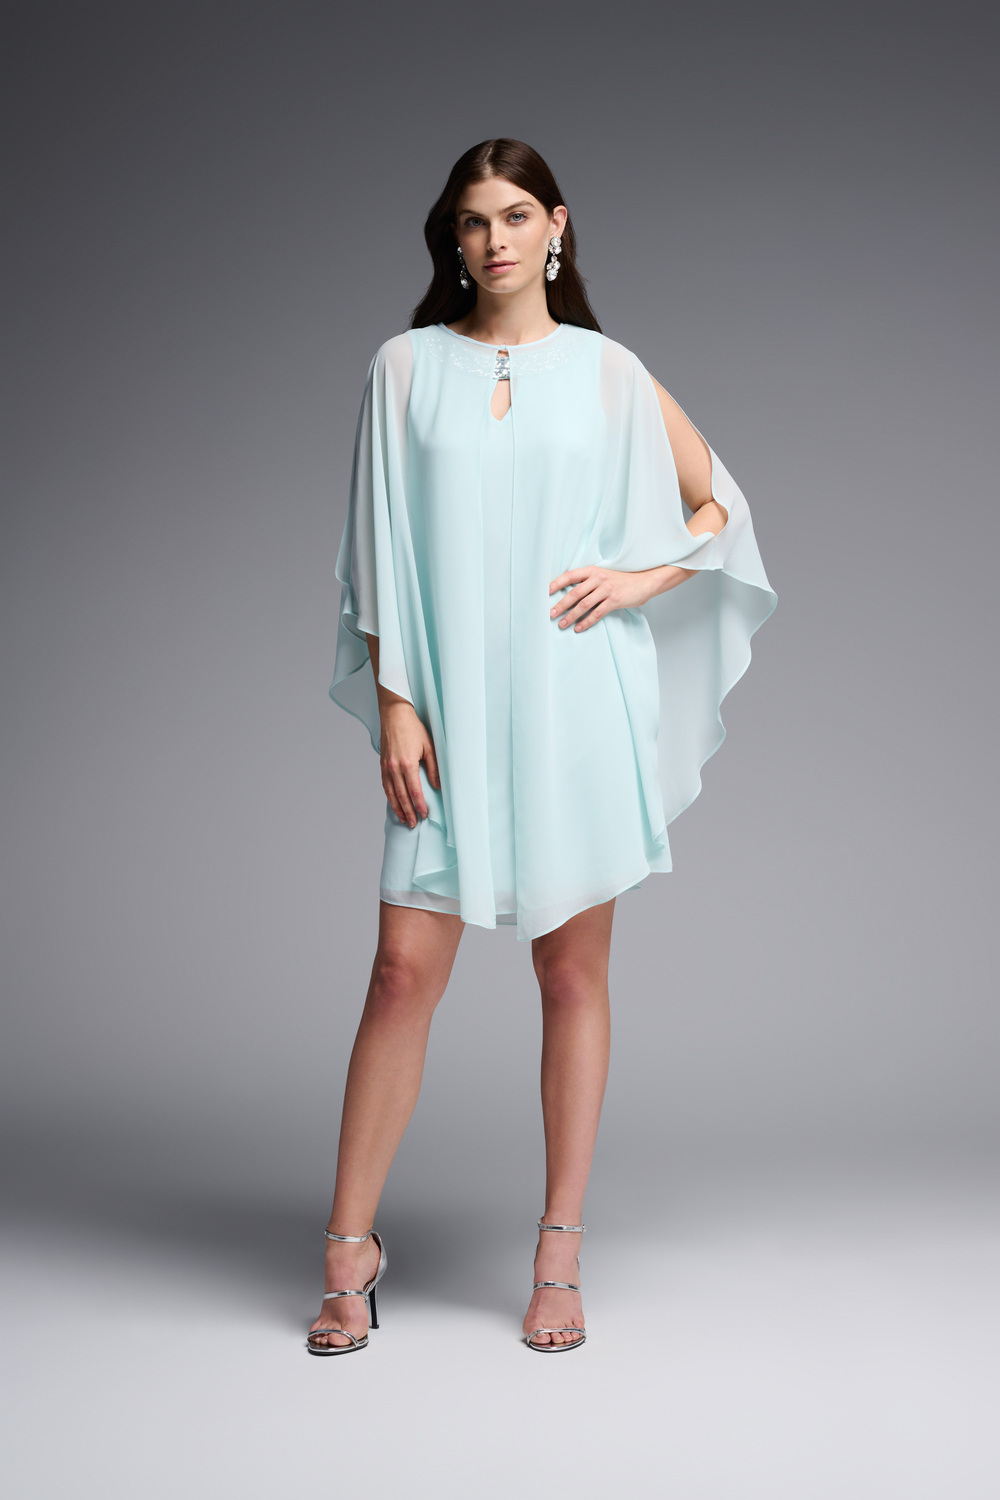 Two-Piece Long-Sleeve Dress Style 231705. Opal